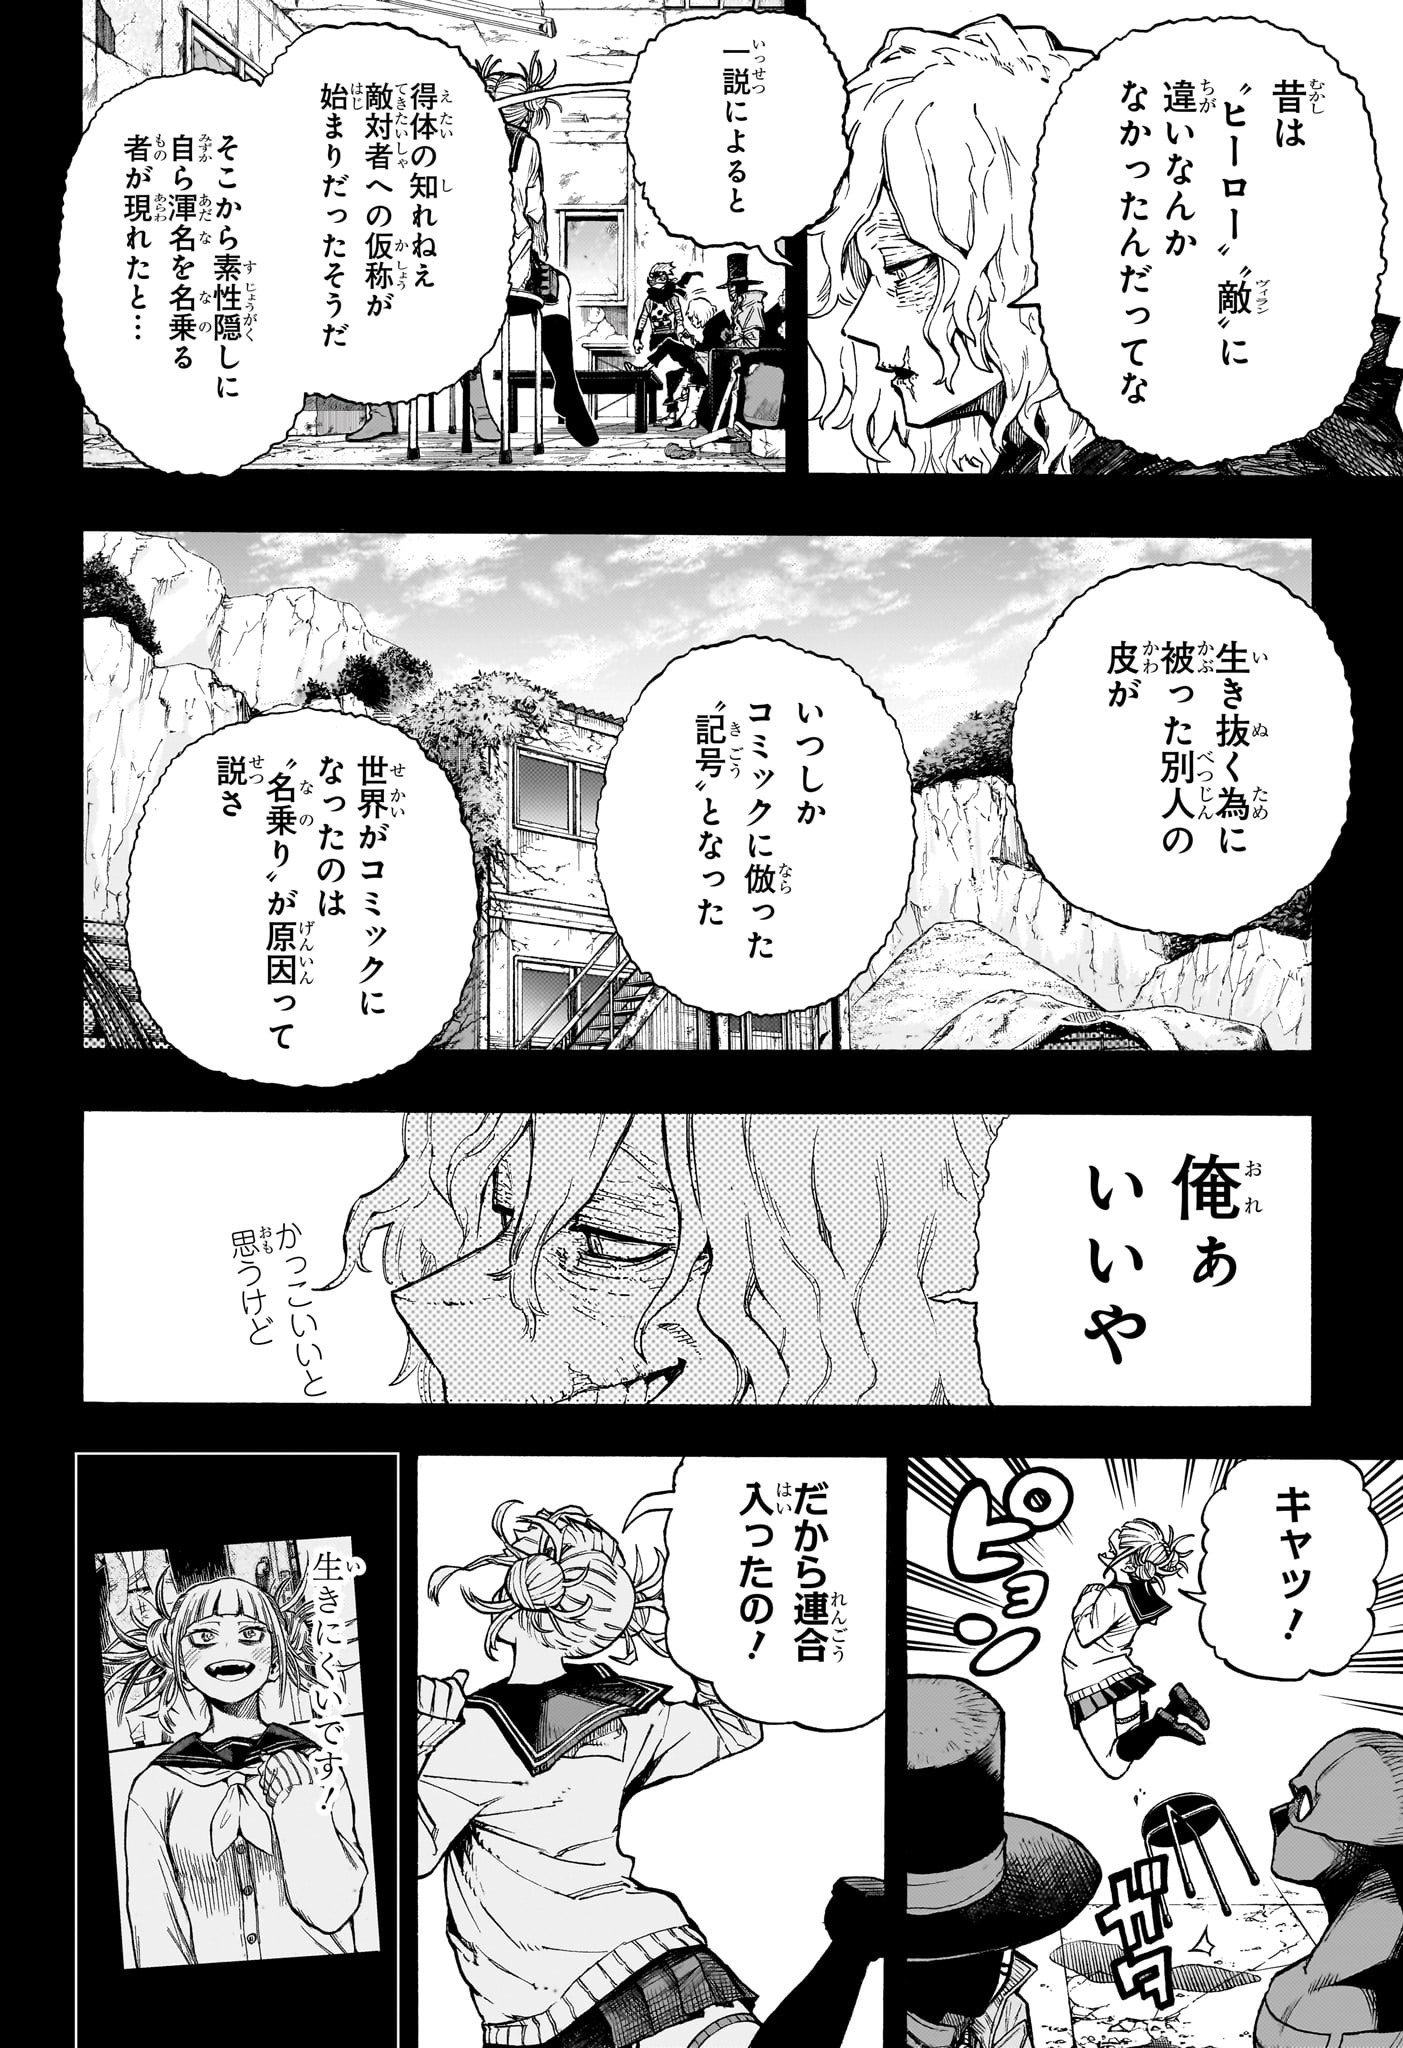 Boku no Hero Academia - Chapter 393 - Page 2